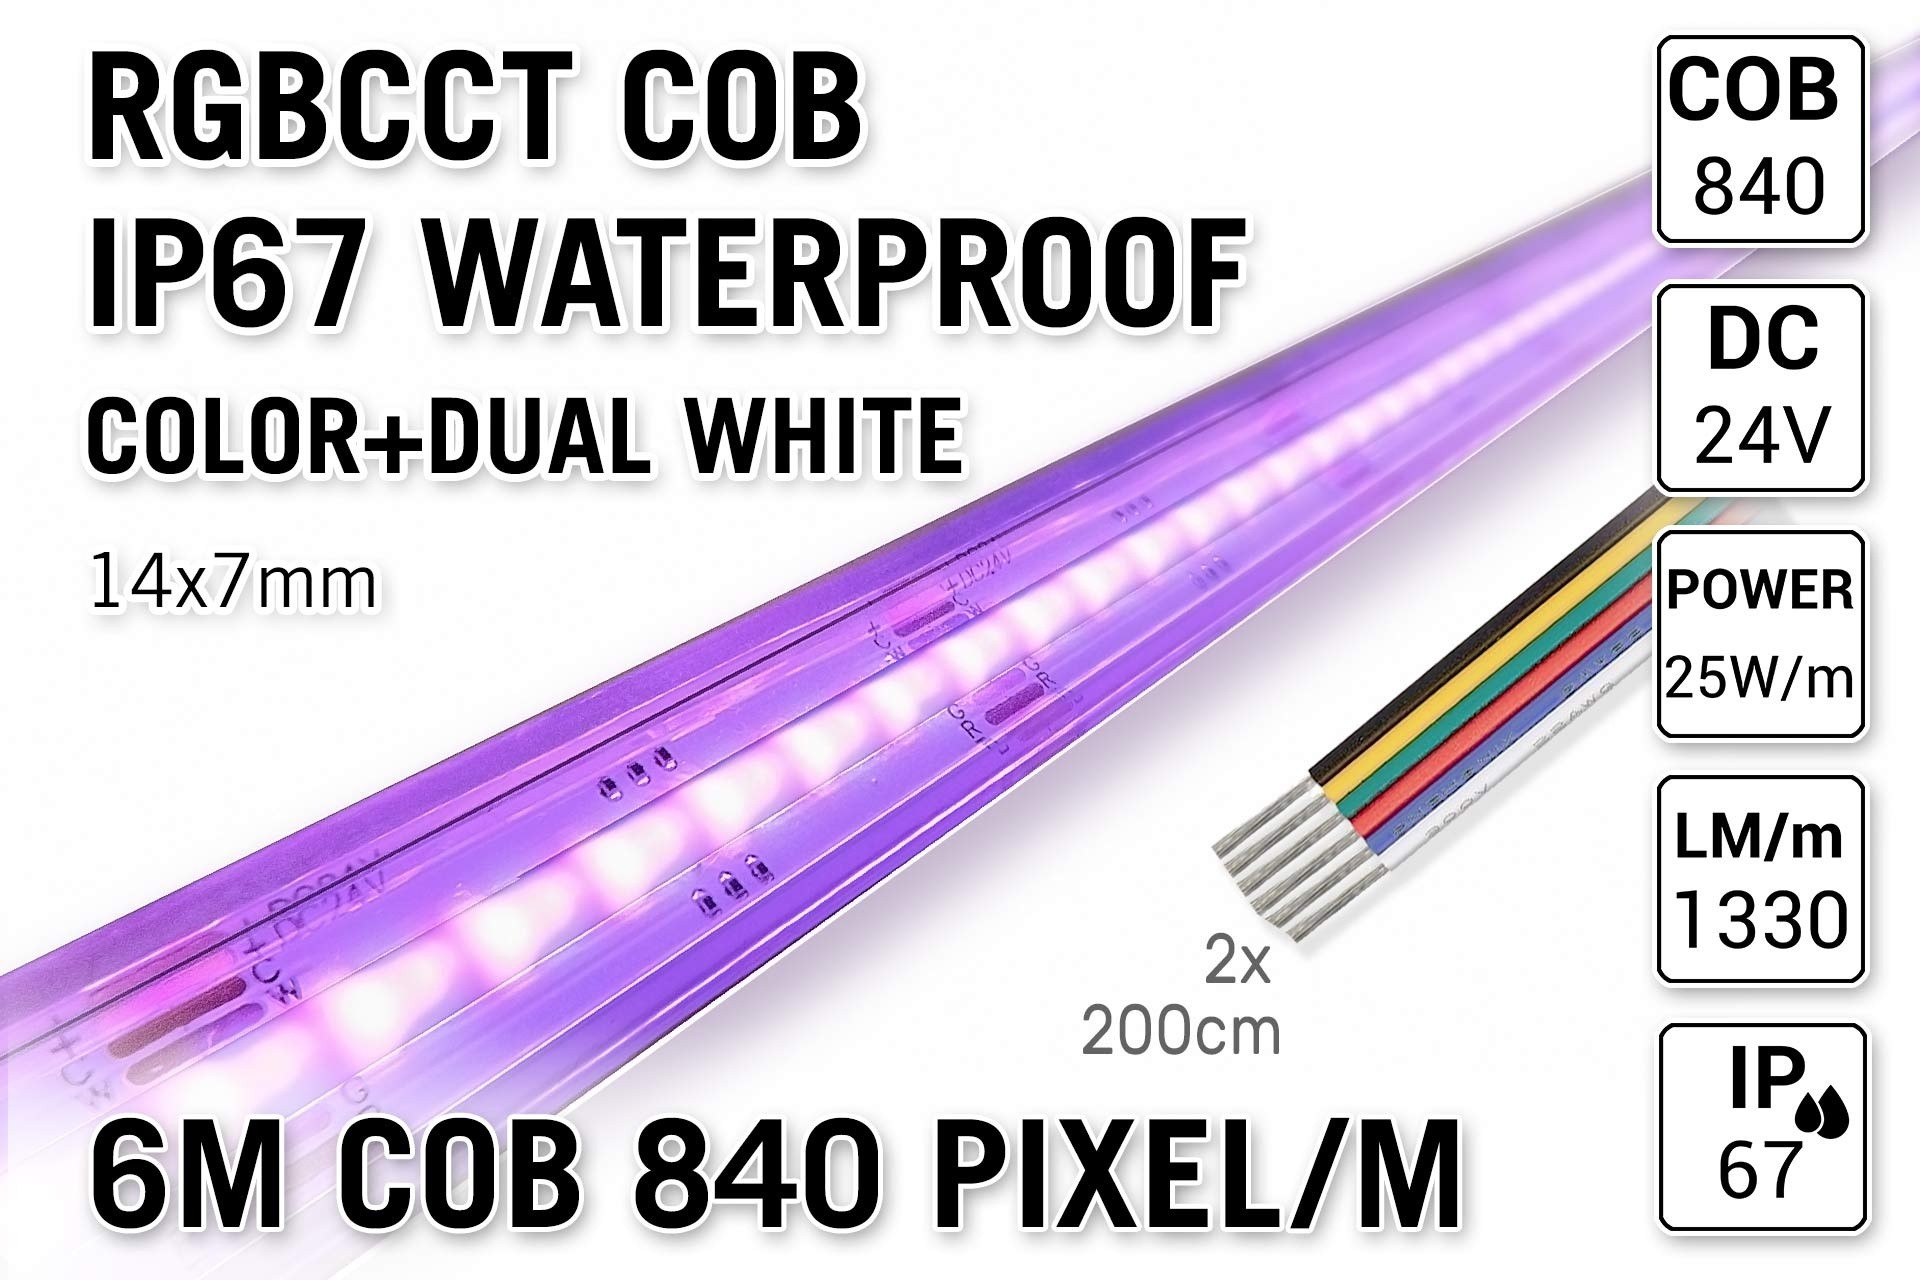 6m COB RGBCCT IP67 Waterproof Led Strip | 25W pm 24V | 840 pixels pm - Losse Strip